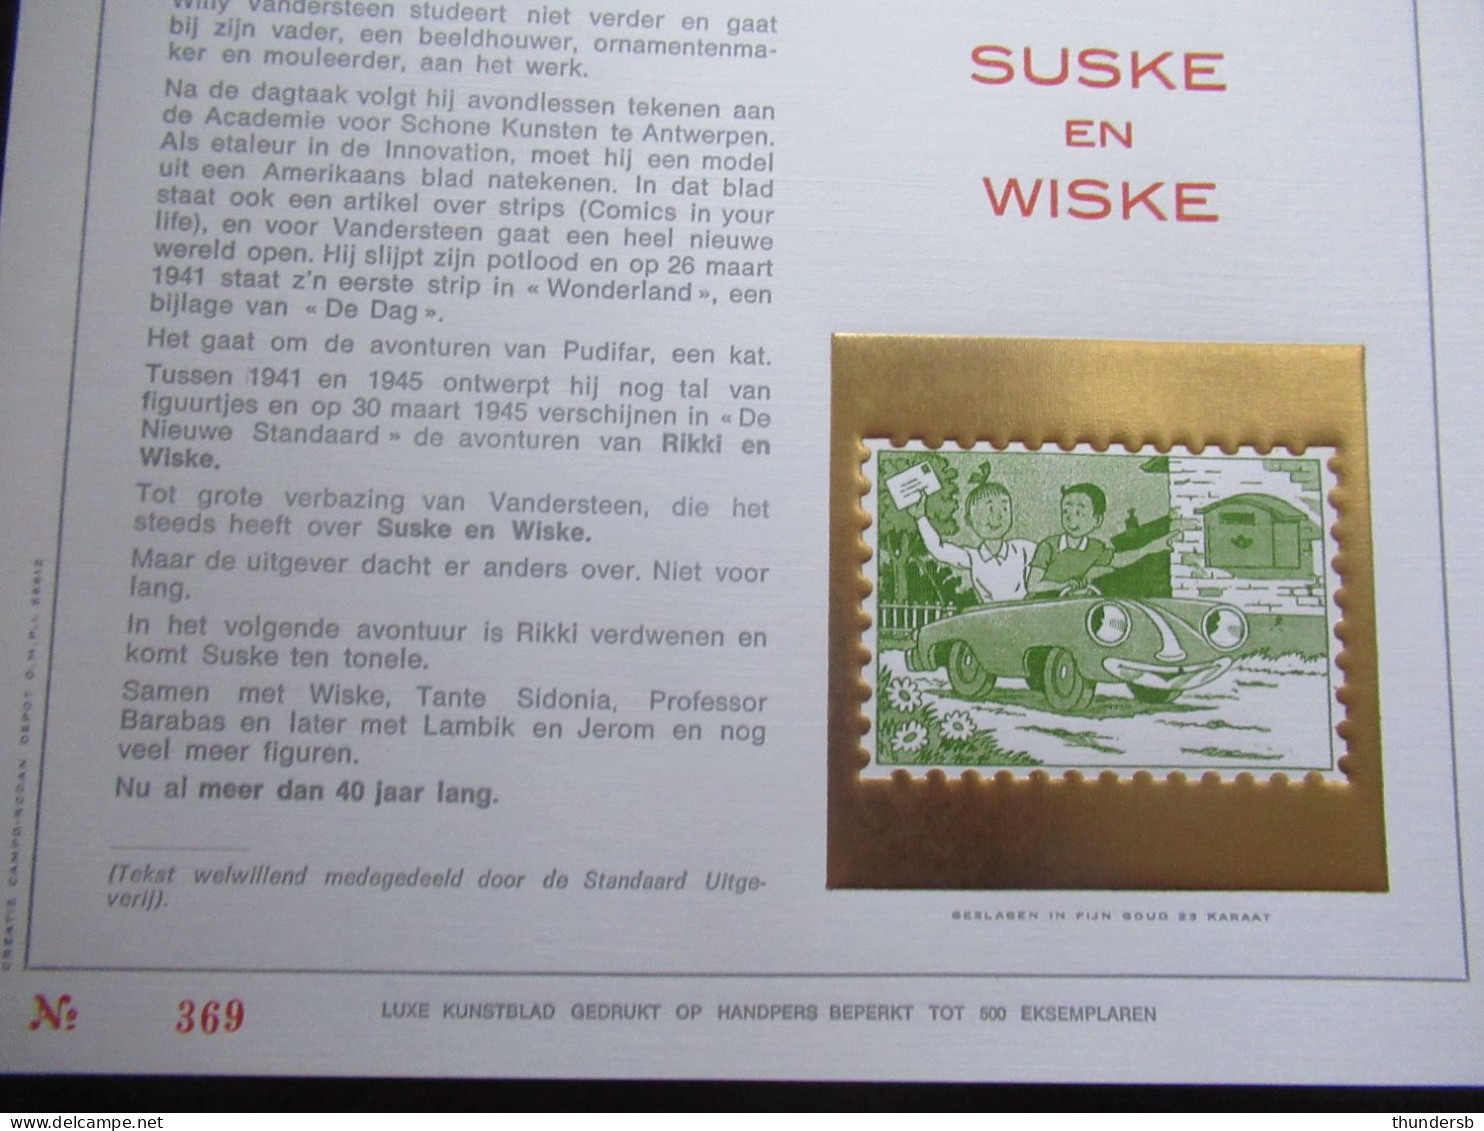 2264 'Jeugdfilatelie: Saske En Wiske' - Luxe Kunstblad - Documenti Commemorativi